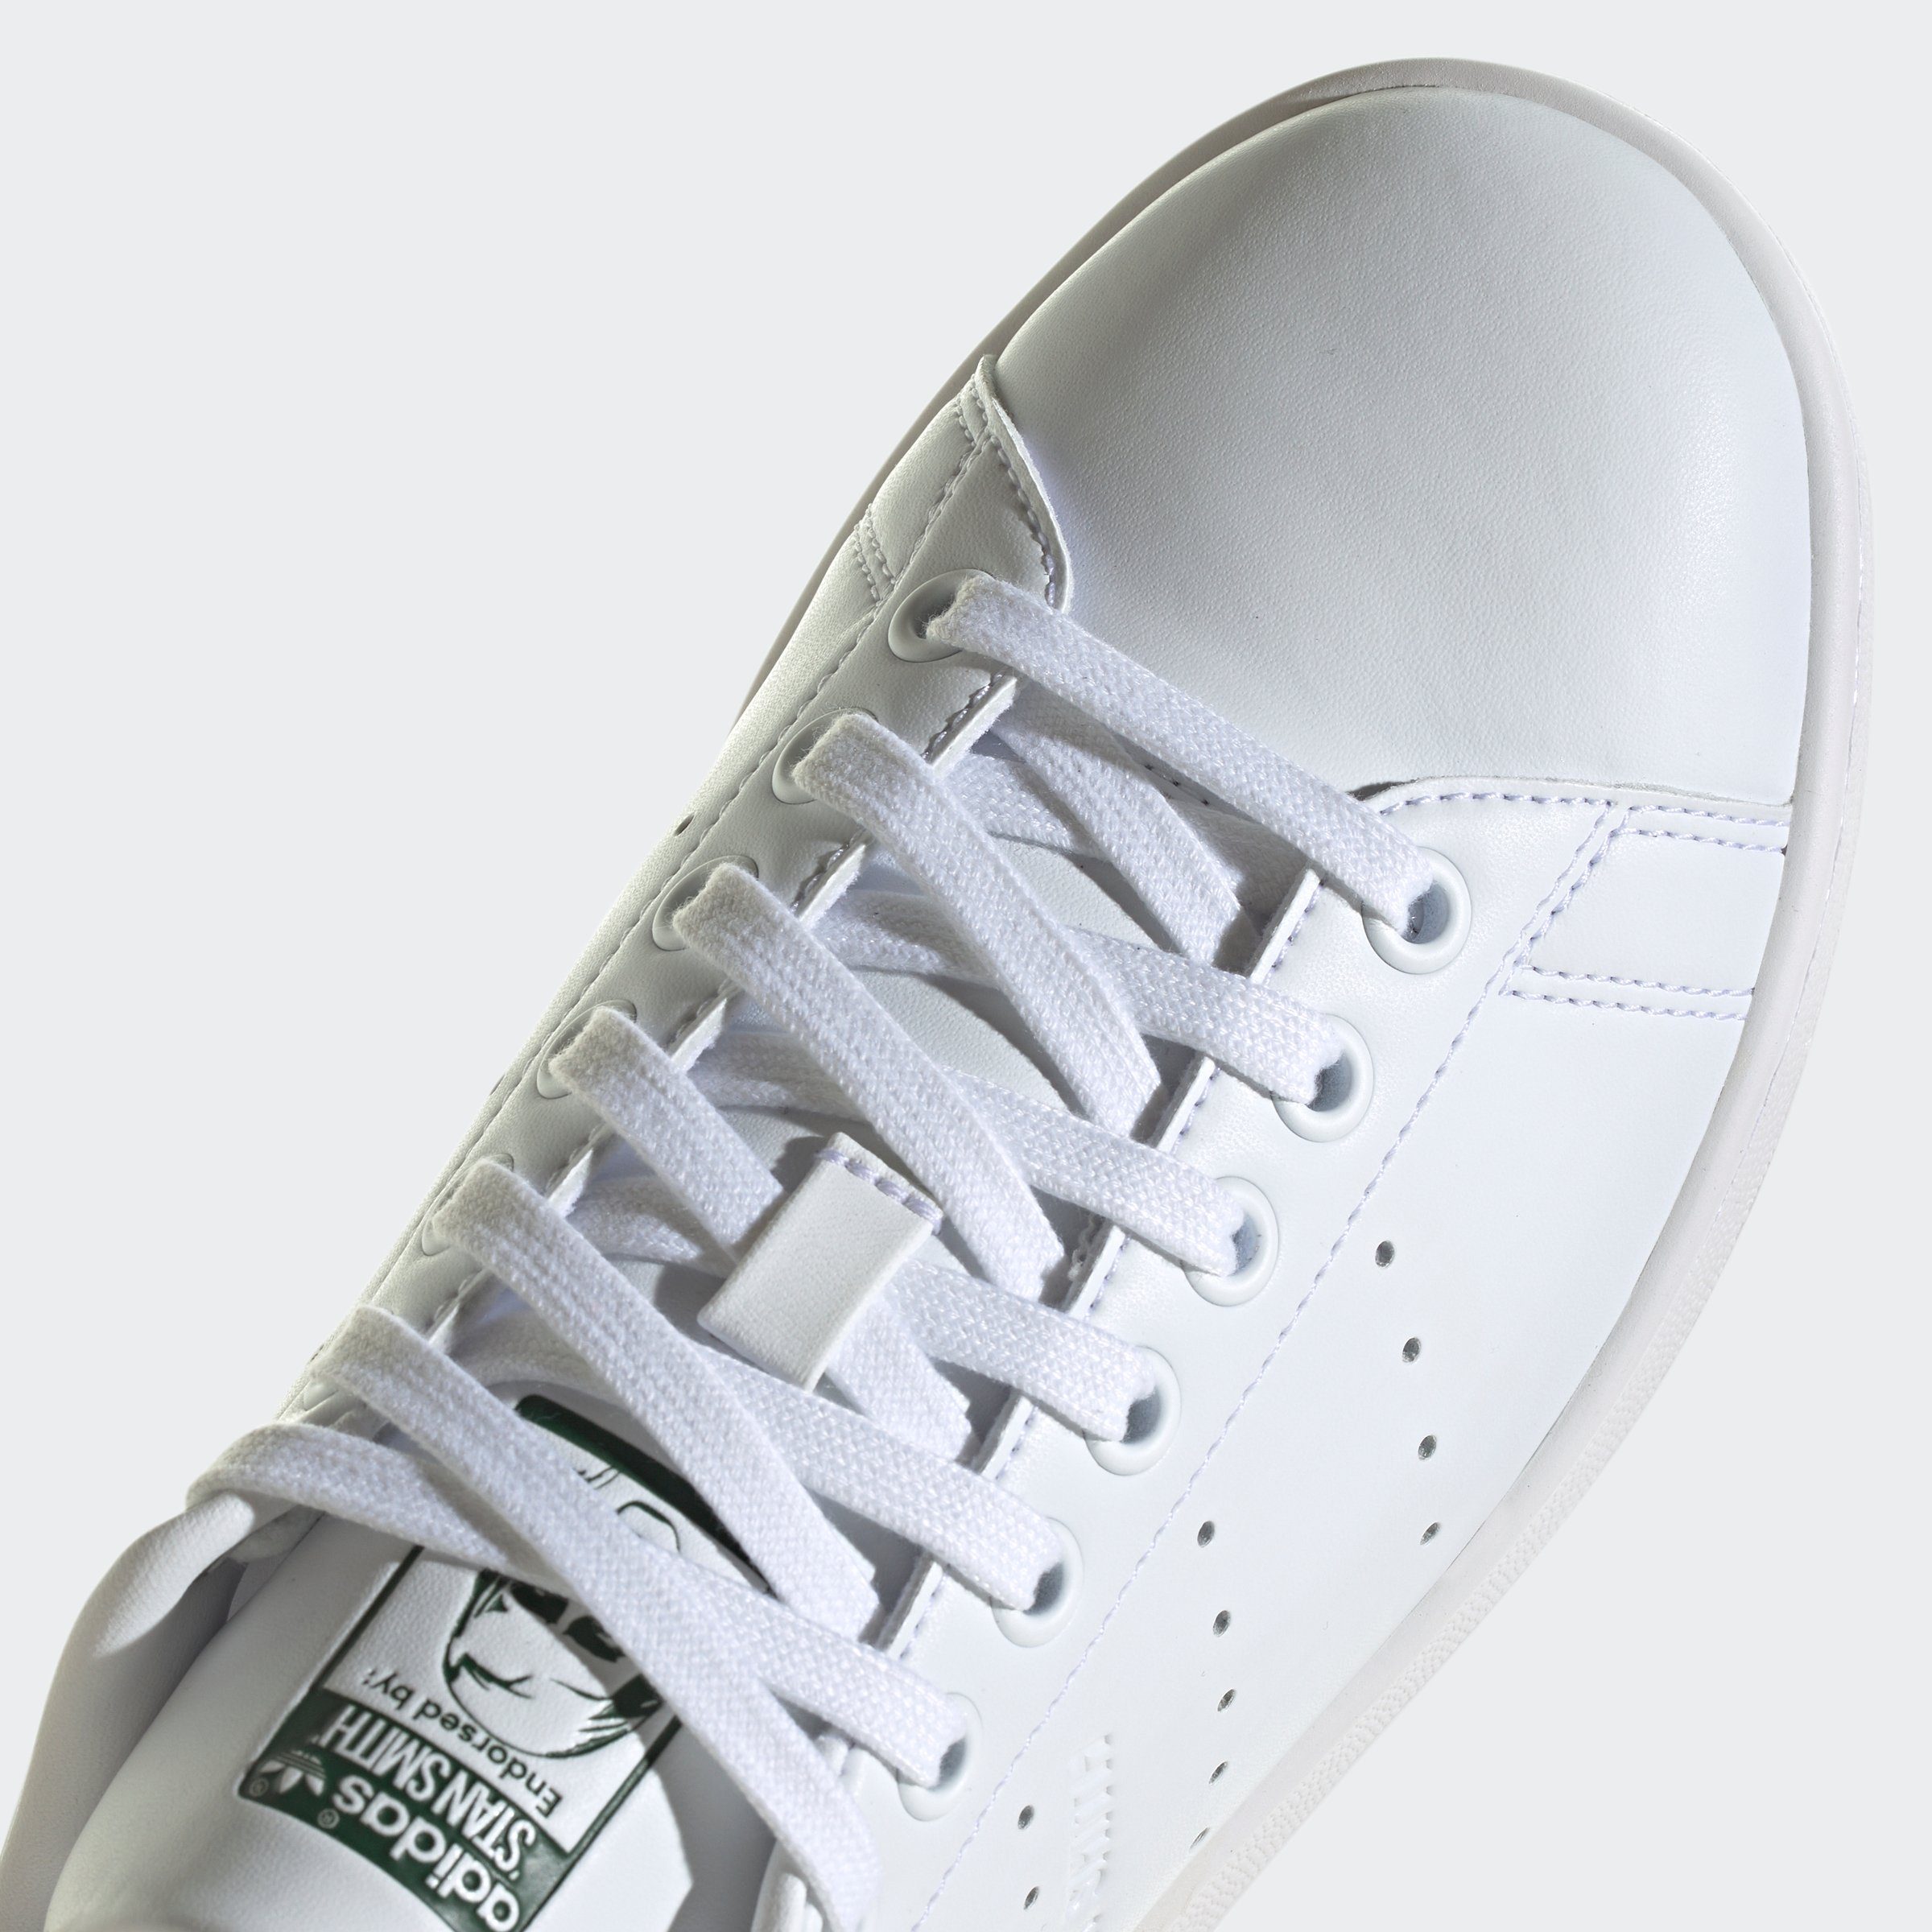 SMITH STAN Originals / Cloud adidas Cloud / Sneaker Green White Dark White